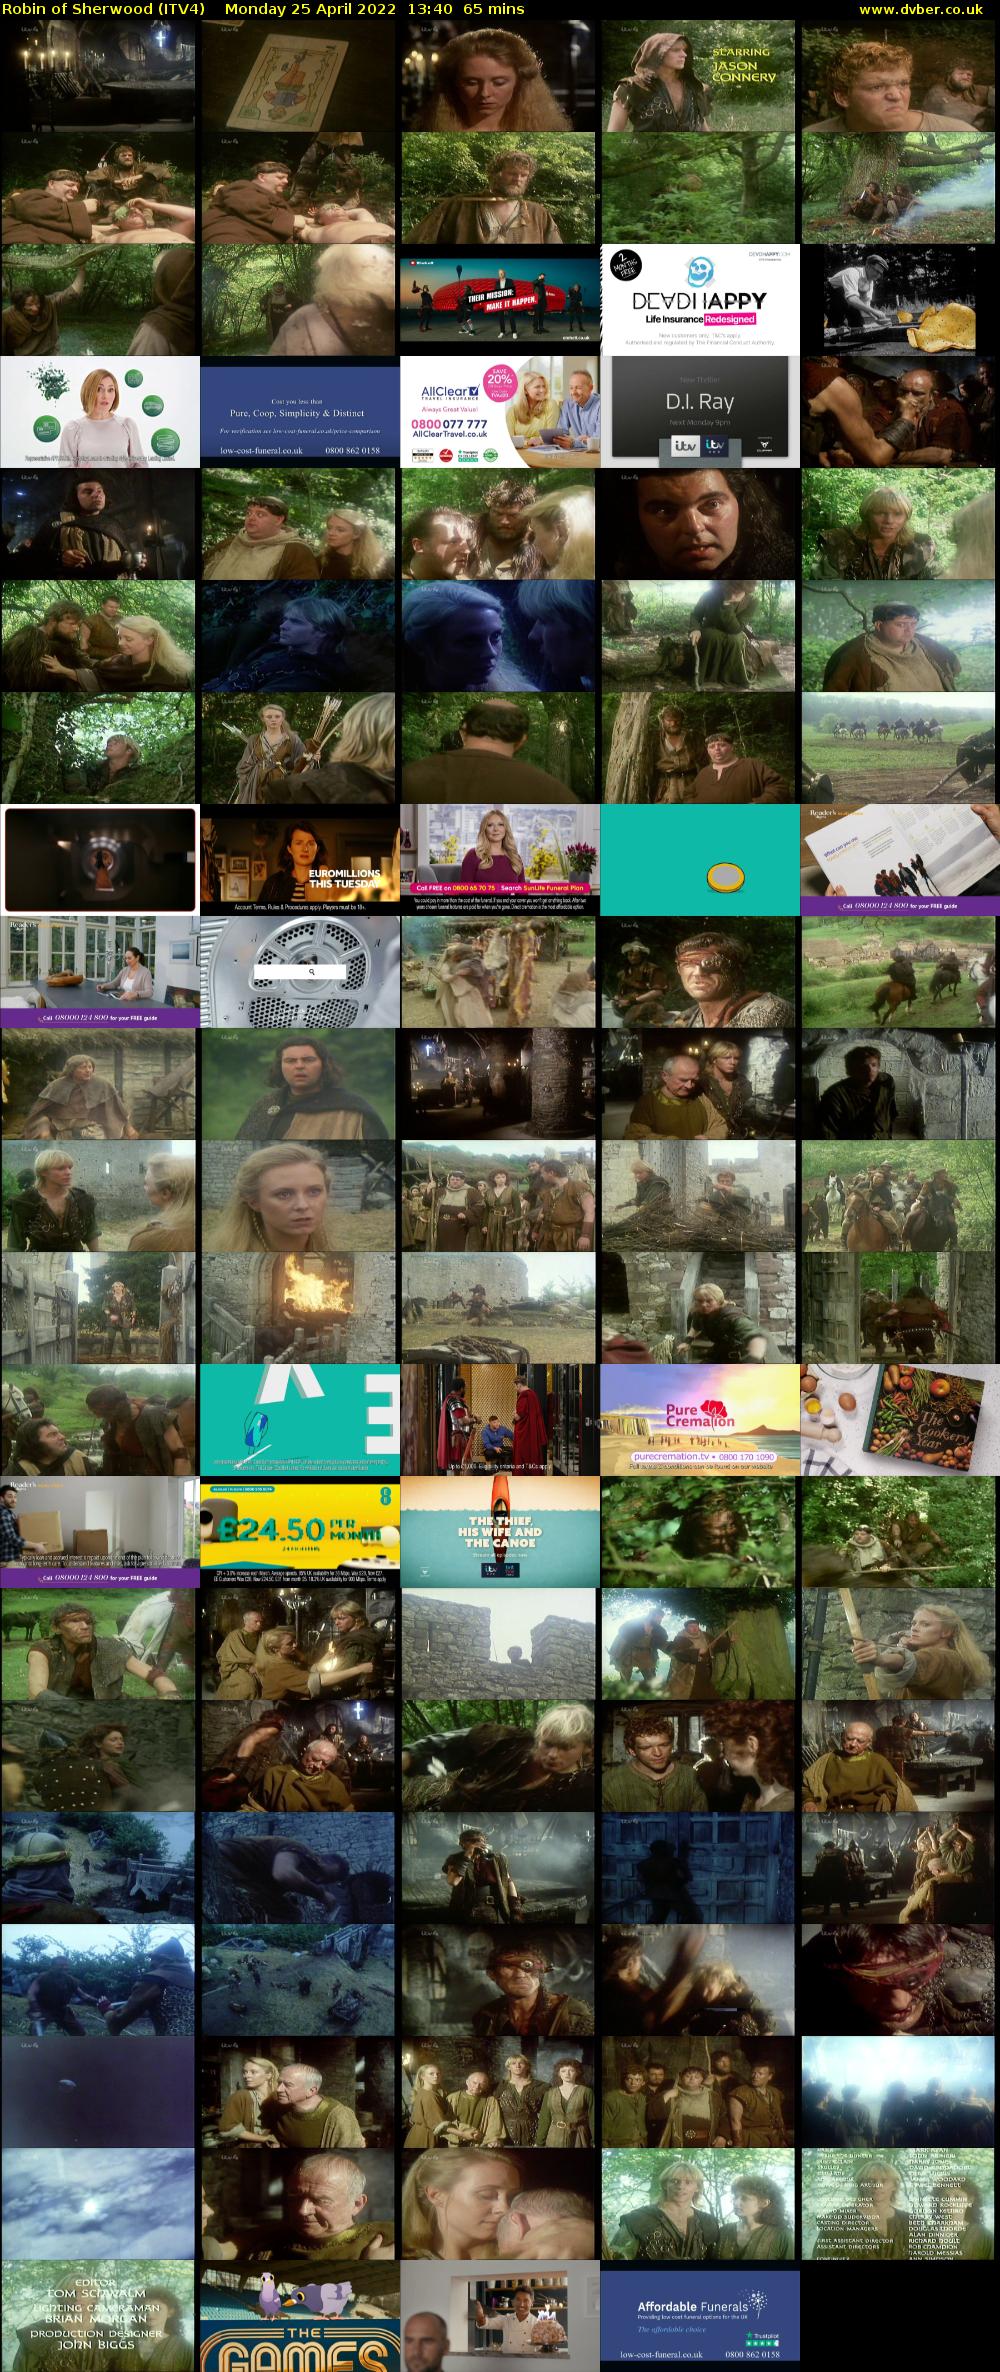 Robin of Sherwood (ITV4) Monday 25 April 2022 13:40 - 14:45